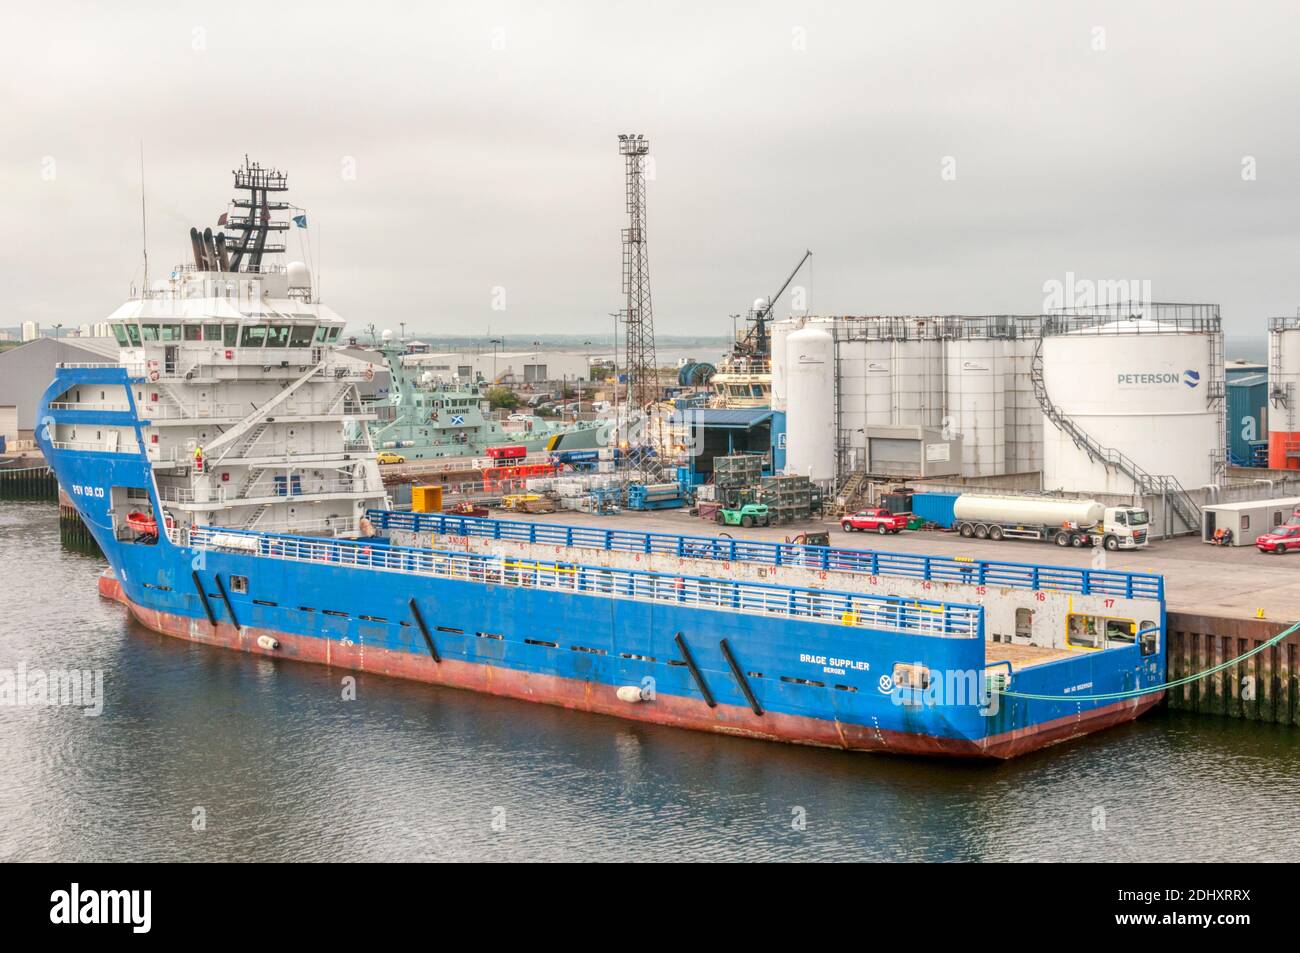 Multi Purpose Offshore Vessel Brage Supplier, registered in Bergen, moored in Aberdeen docks. Stock Photo